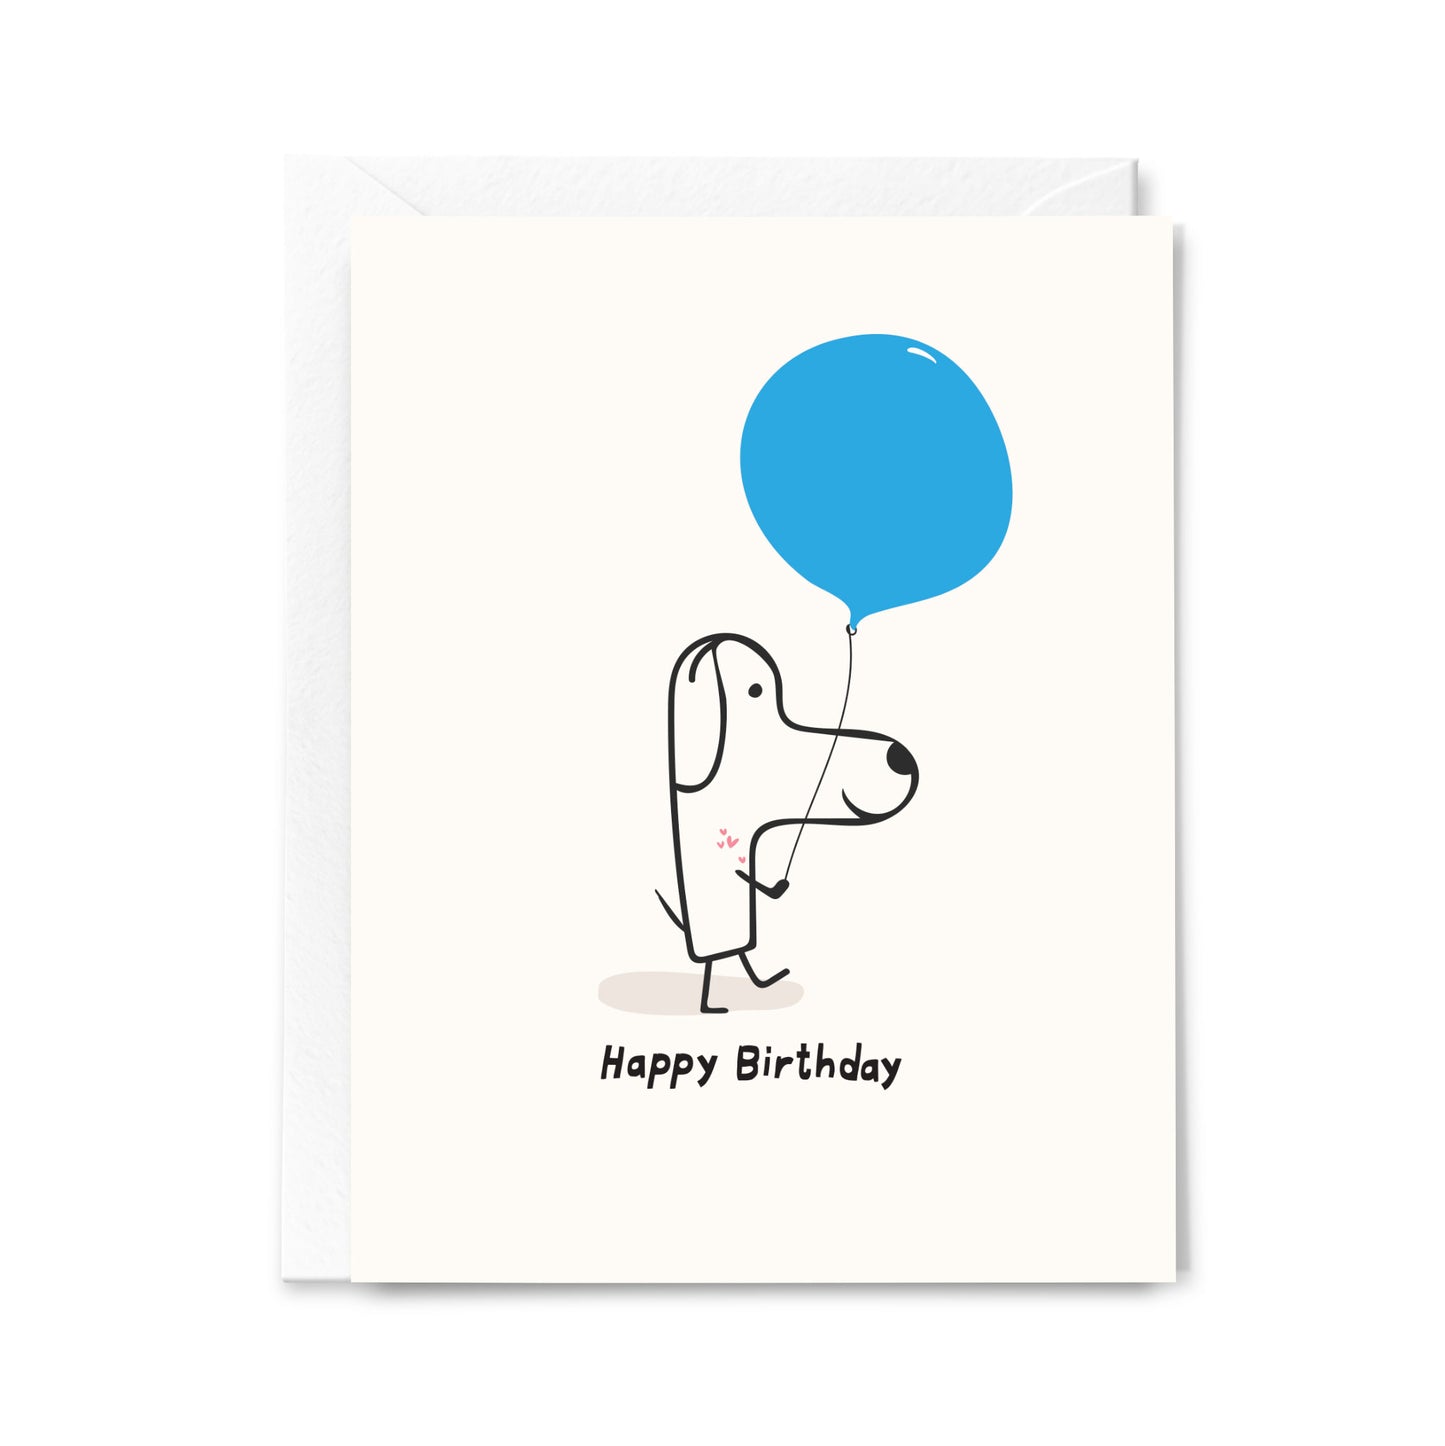 Happy Birthday Stanley's Balloon